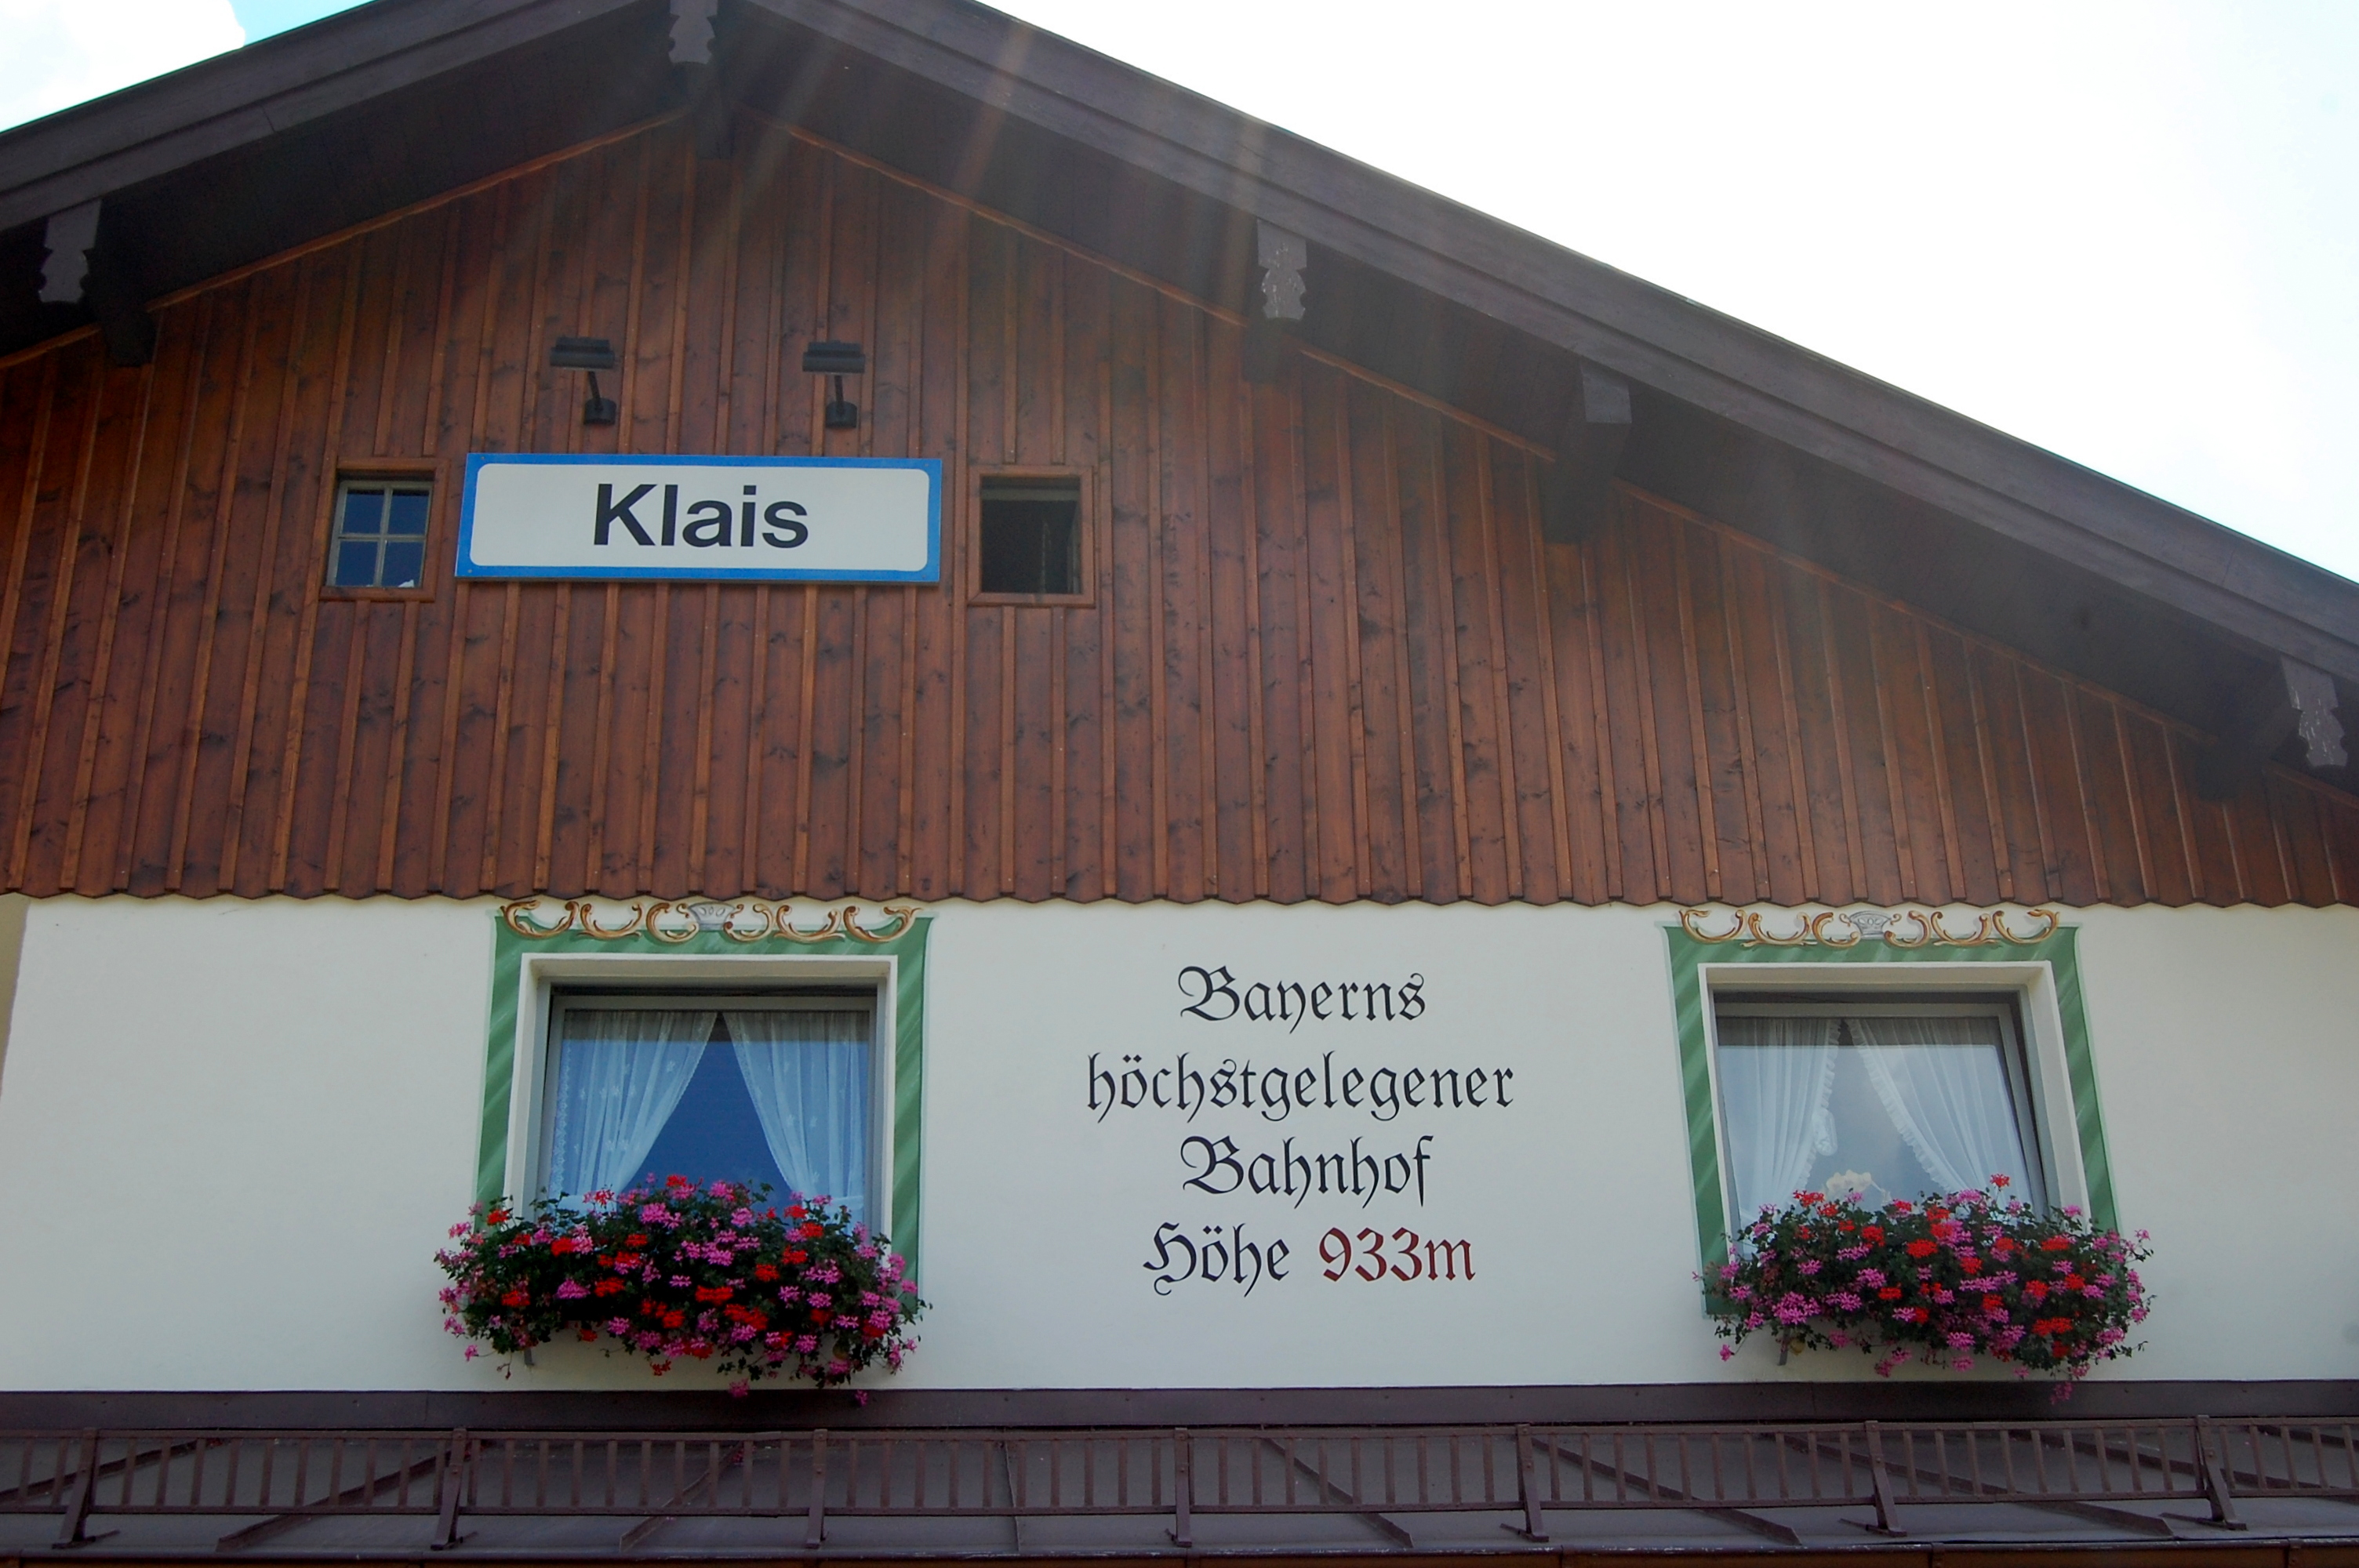 Klais - highest station in Bavaria